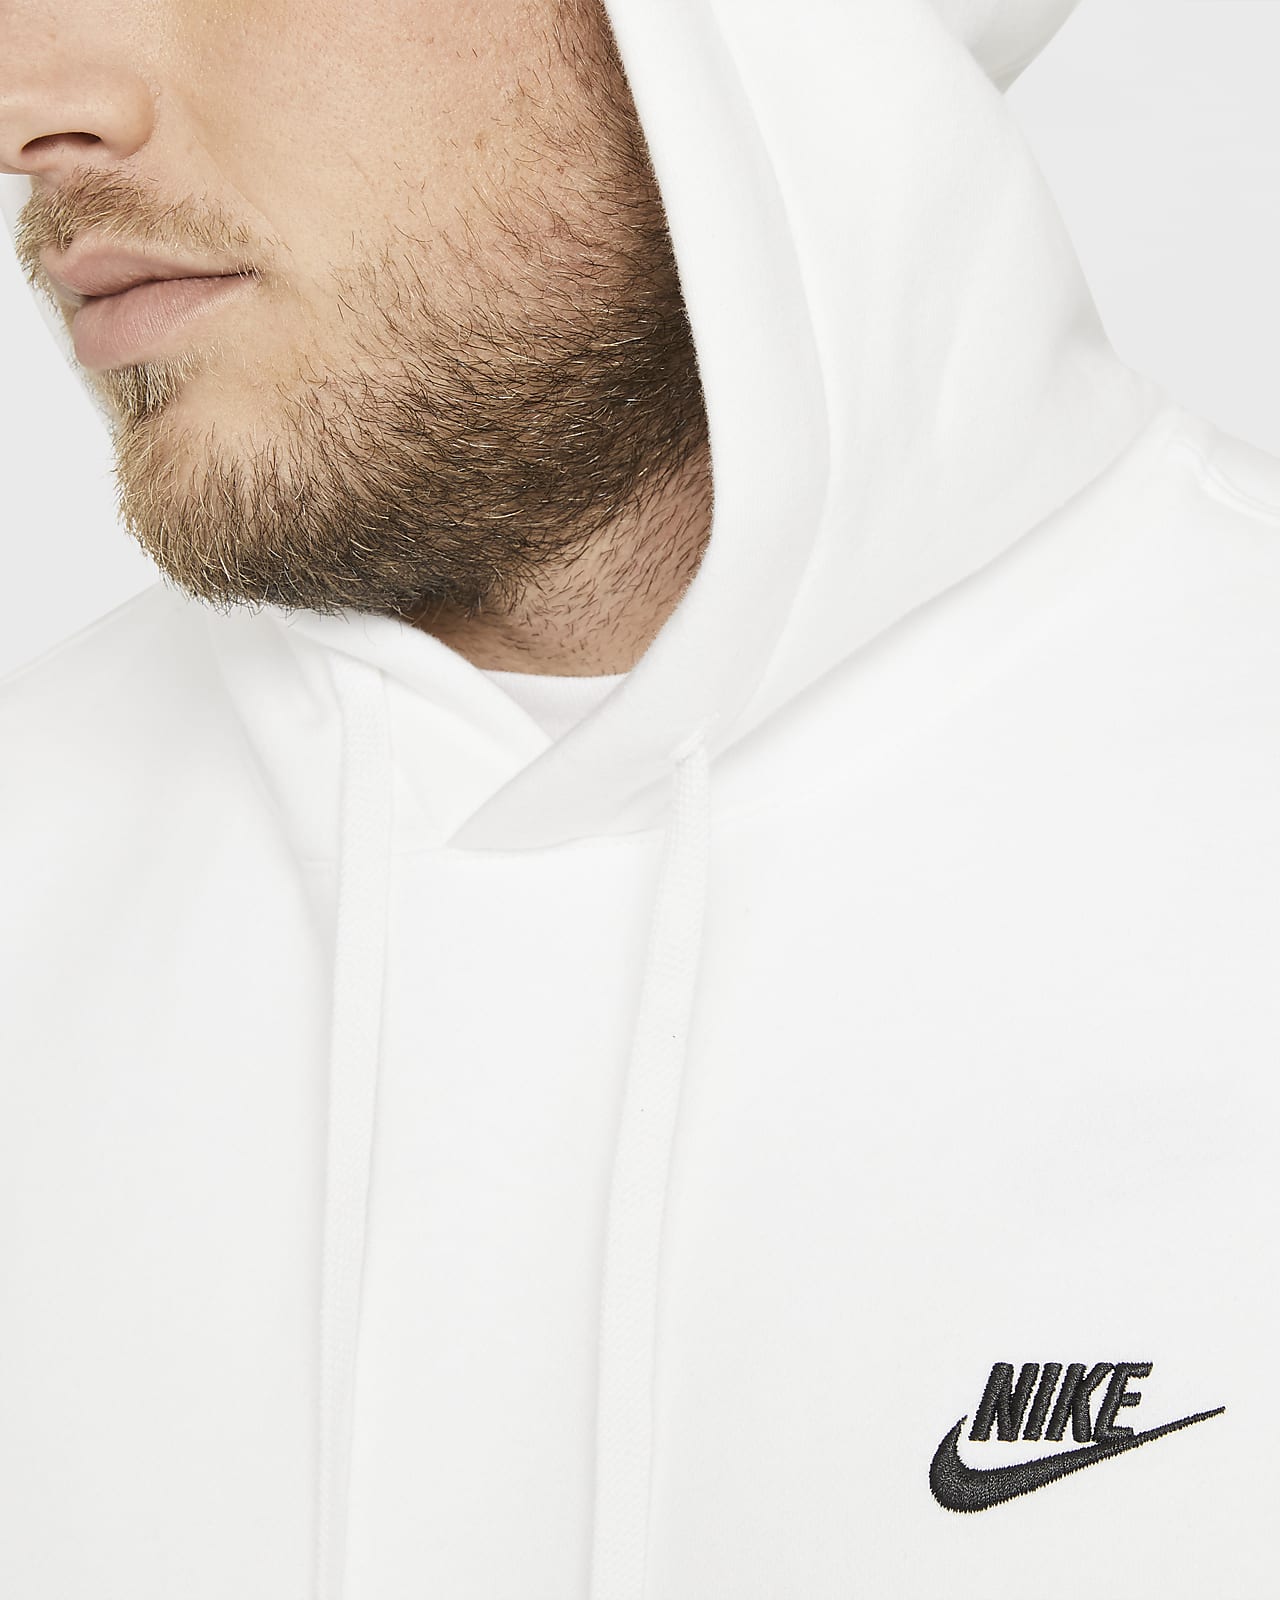 where can i buy nike hoodies